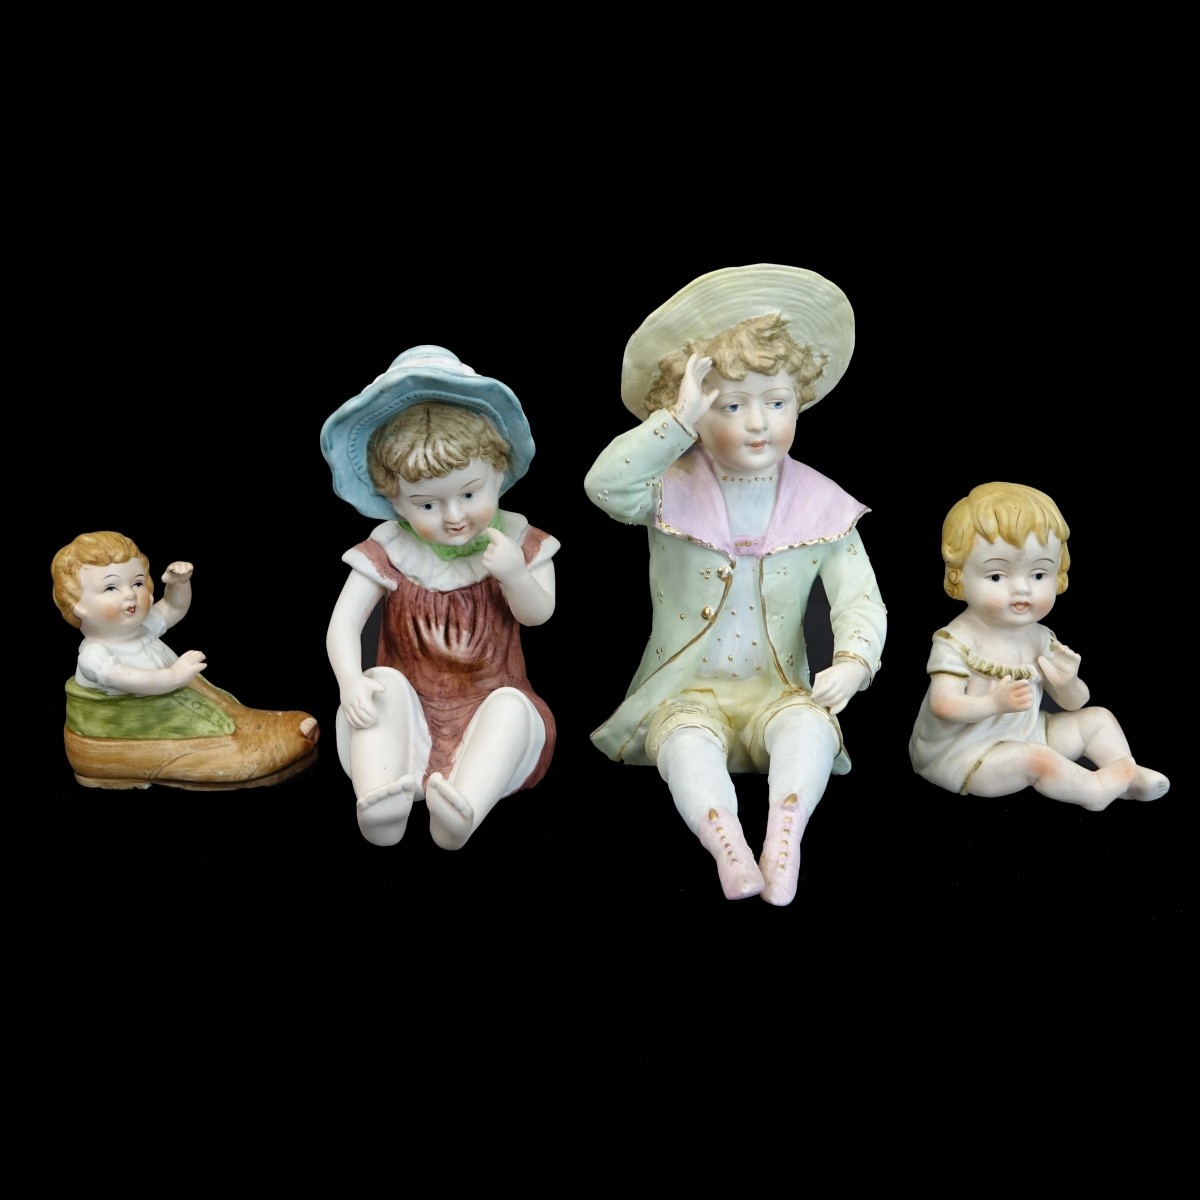 Four (4) Vintage Bisque Figurines